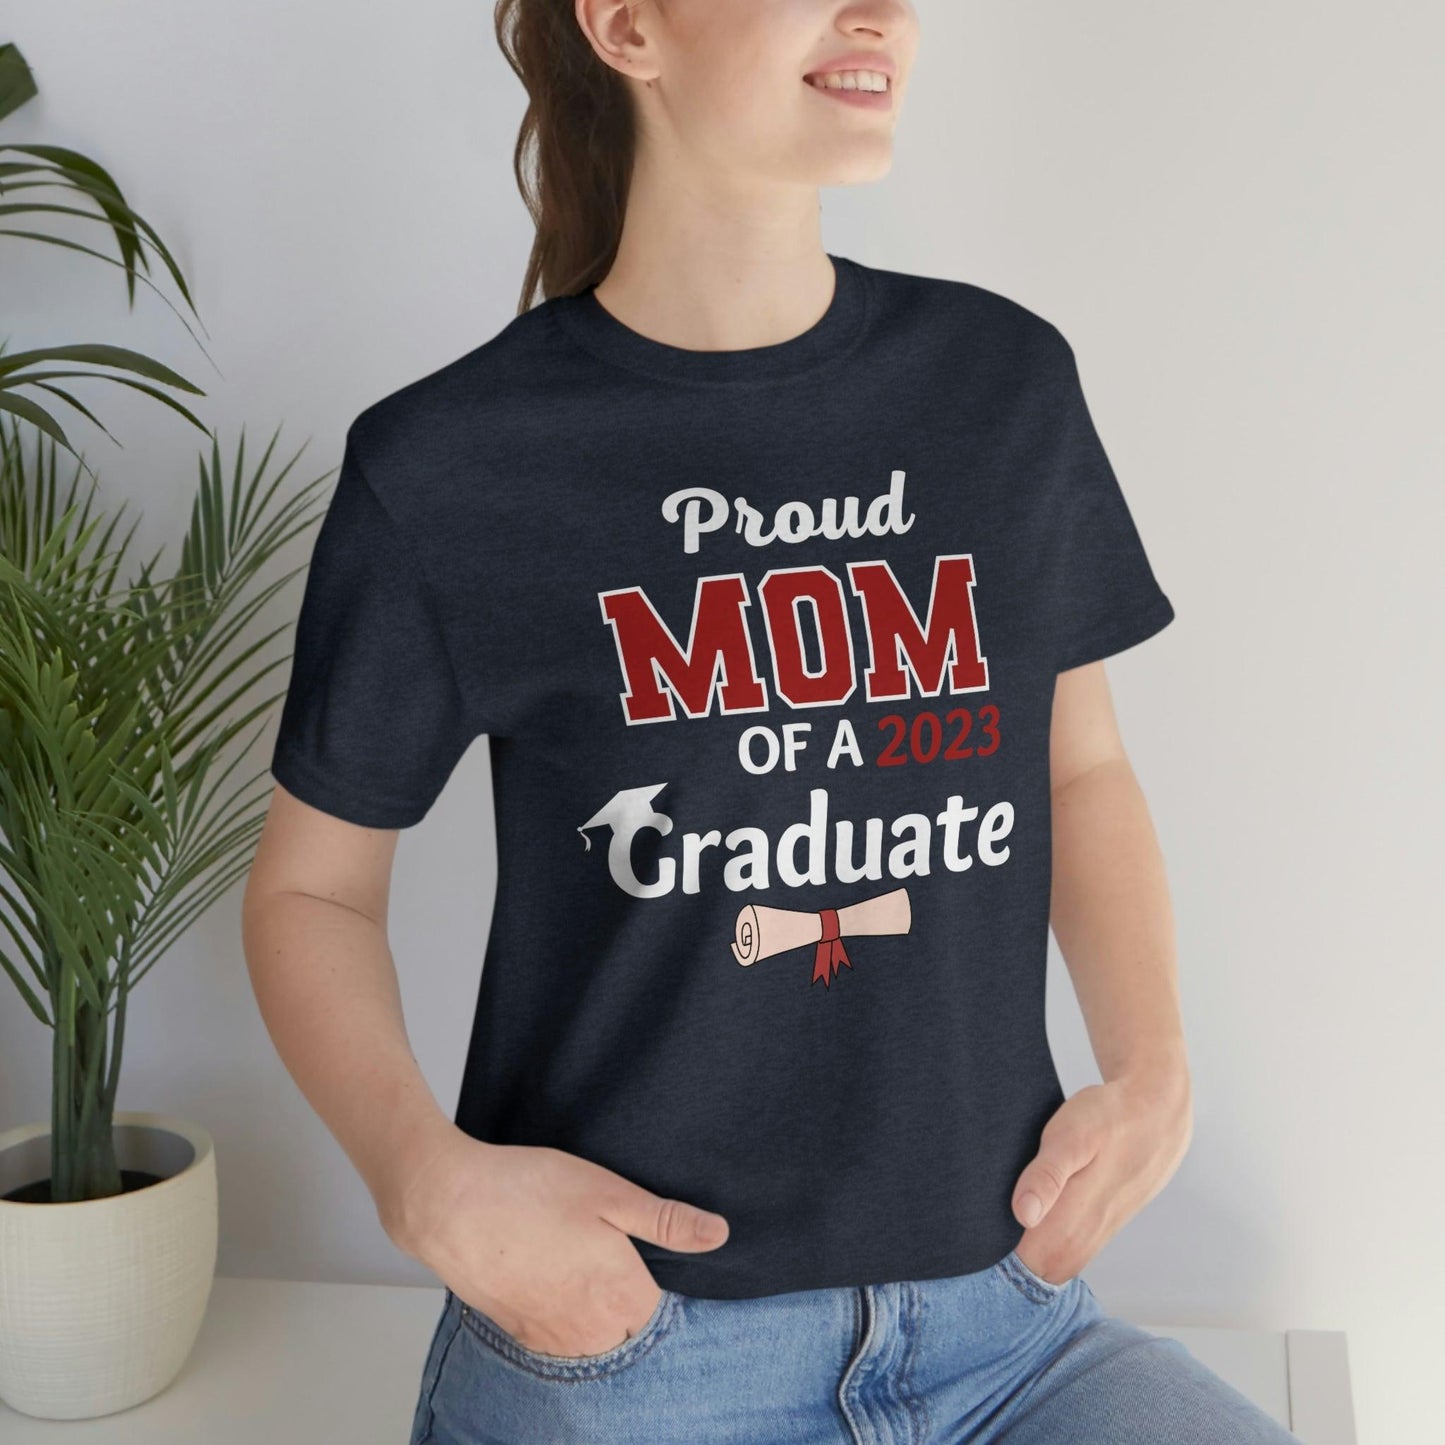 Proud mom of a Graduate shirt - Graduation shirt - Graduation gift